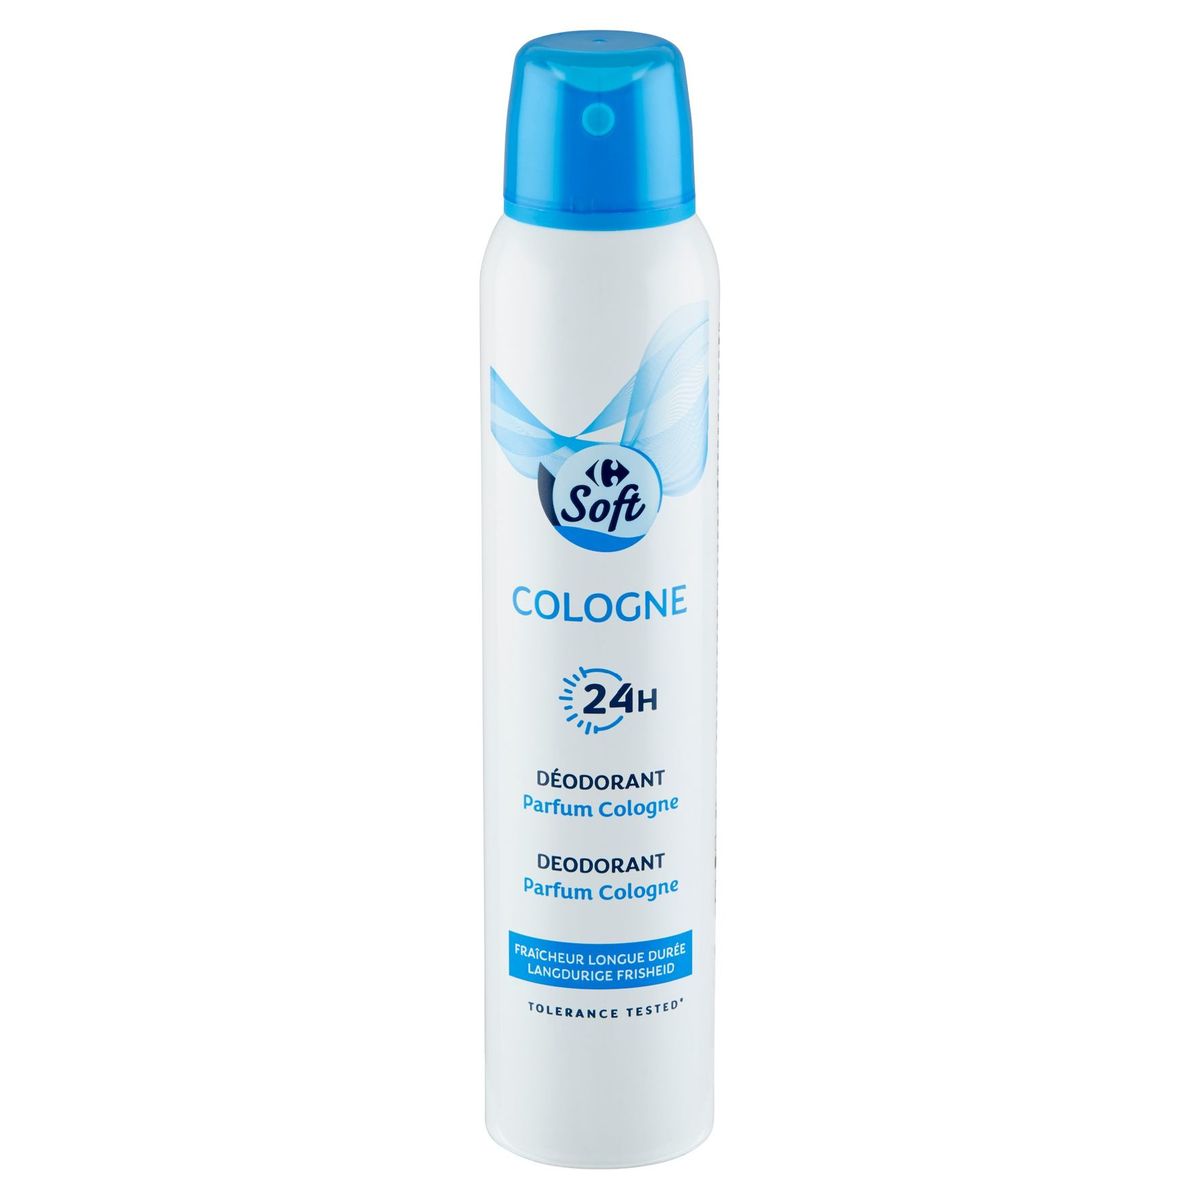 Carrefour Soft Deodorant Cologne 24H 200 ml